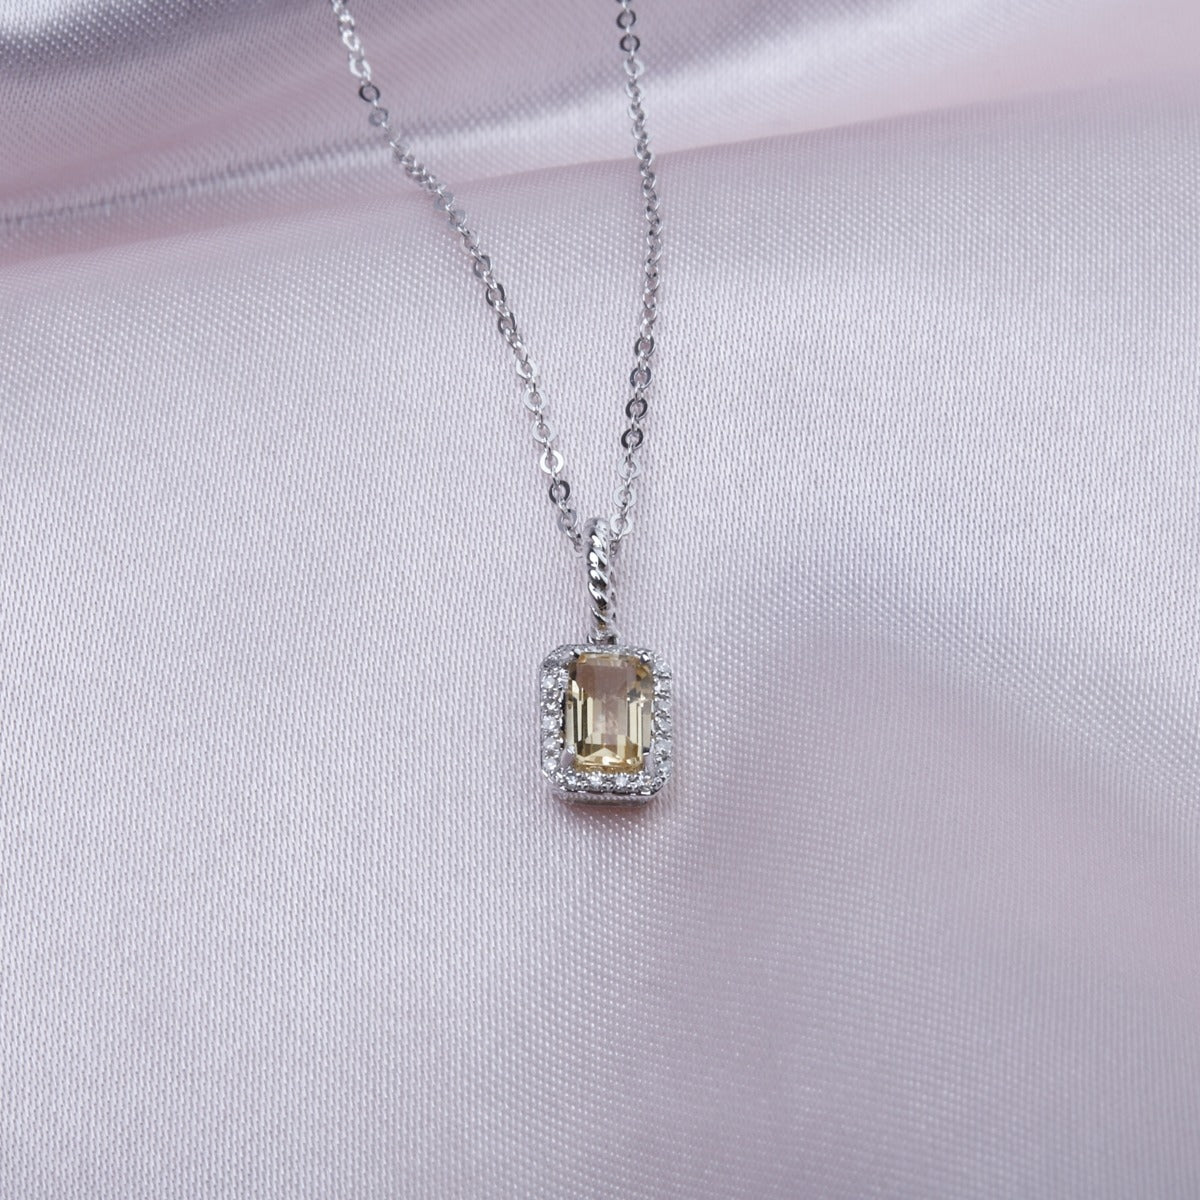 Blue Topaz & Diamond Frame 14K White Gold Pendant Necklace